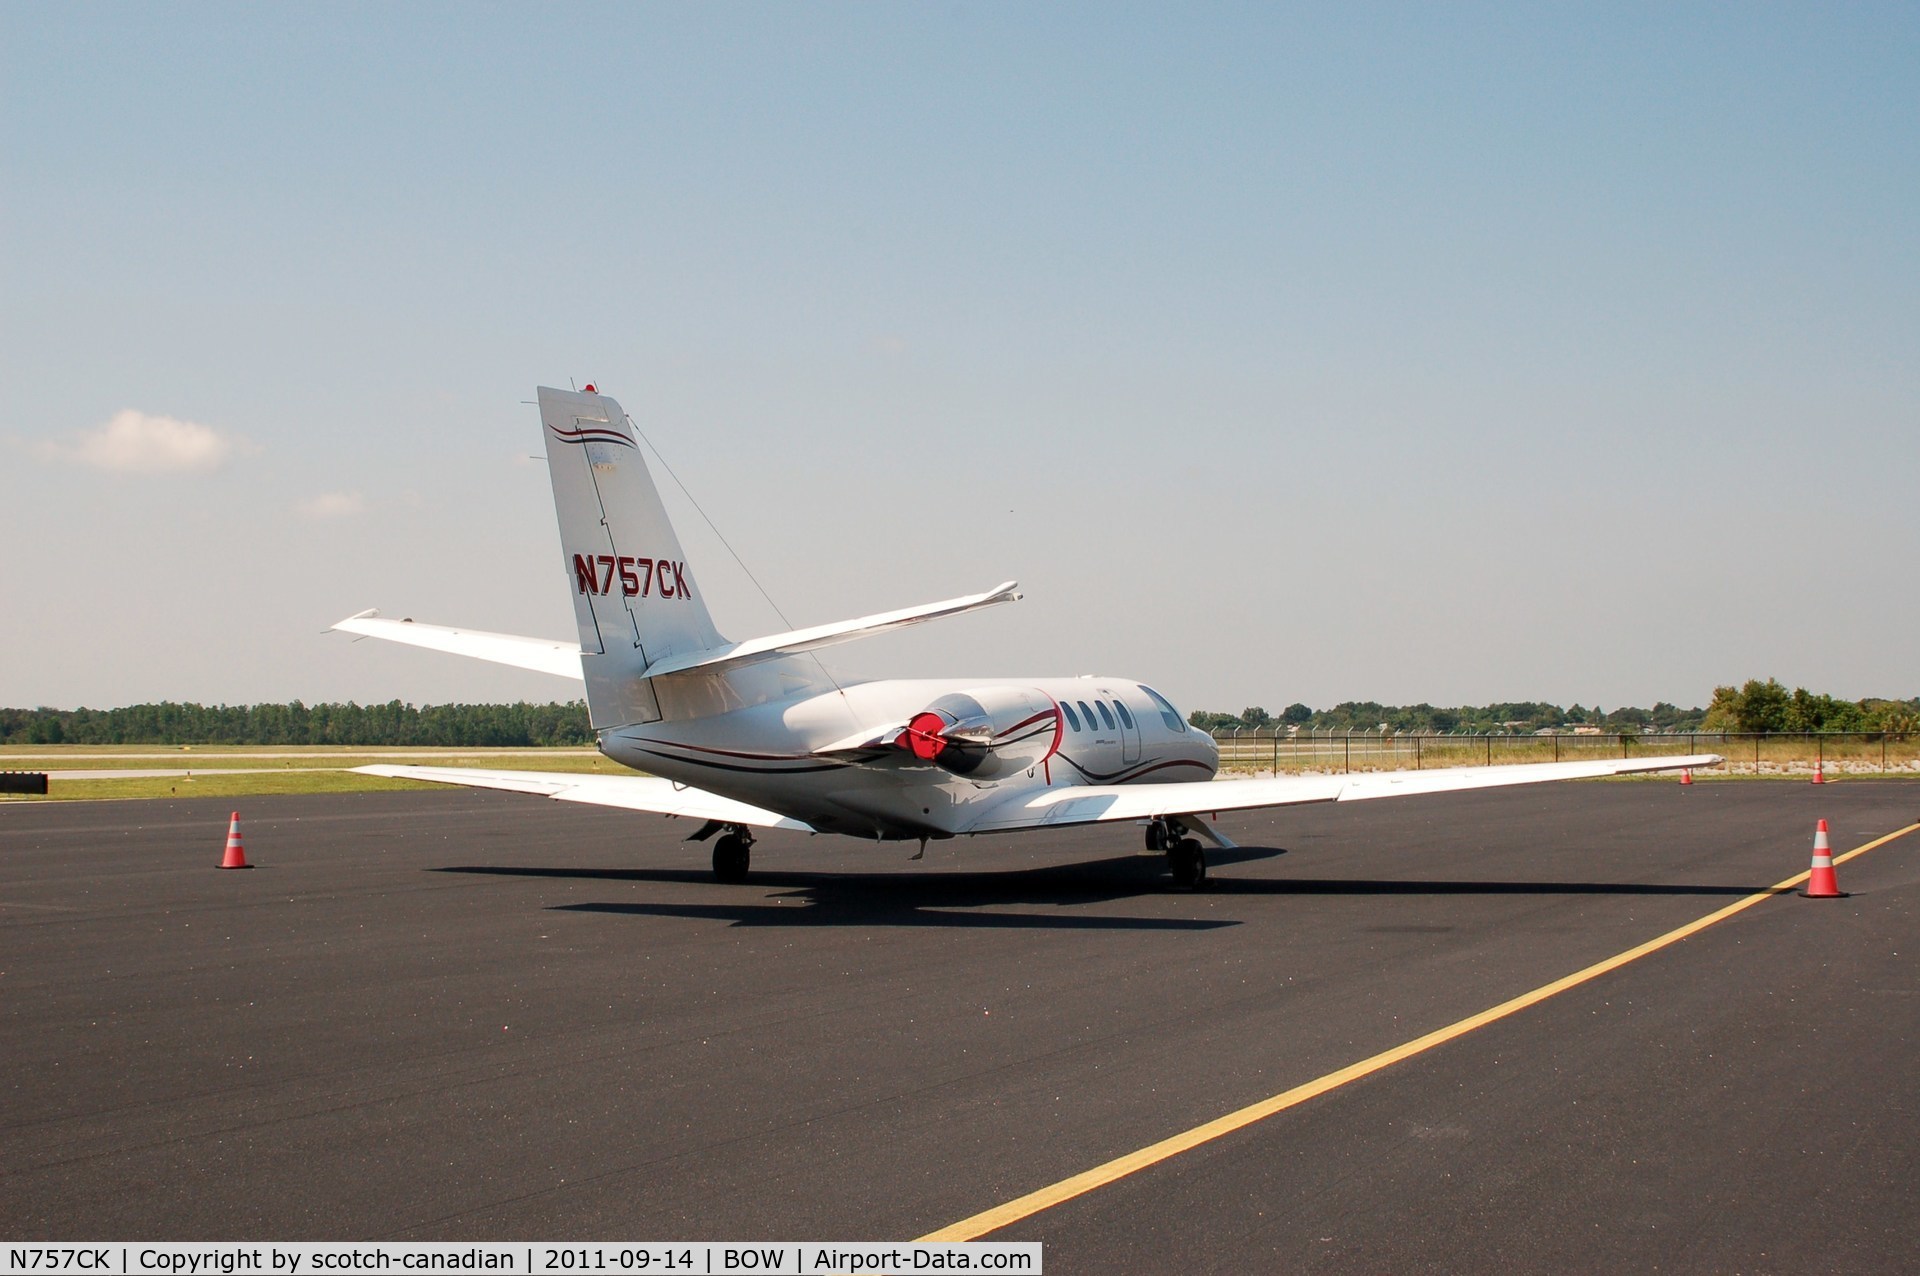 N757CK, 1989 Cessna 560 Citation V C/N 560-0028, 1989 Cessna 560 N757CK at Bartow Municipal Airport, Bartow, FL